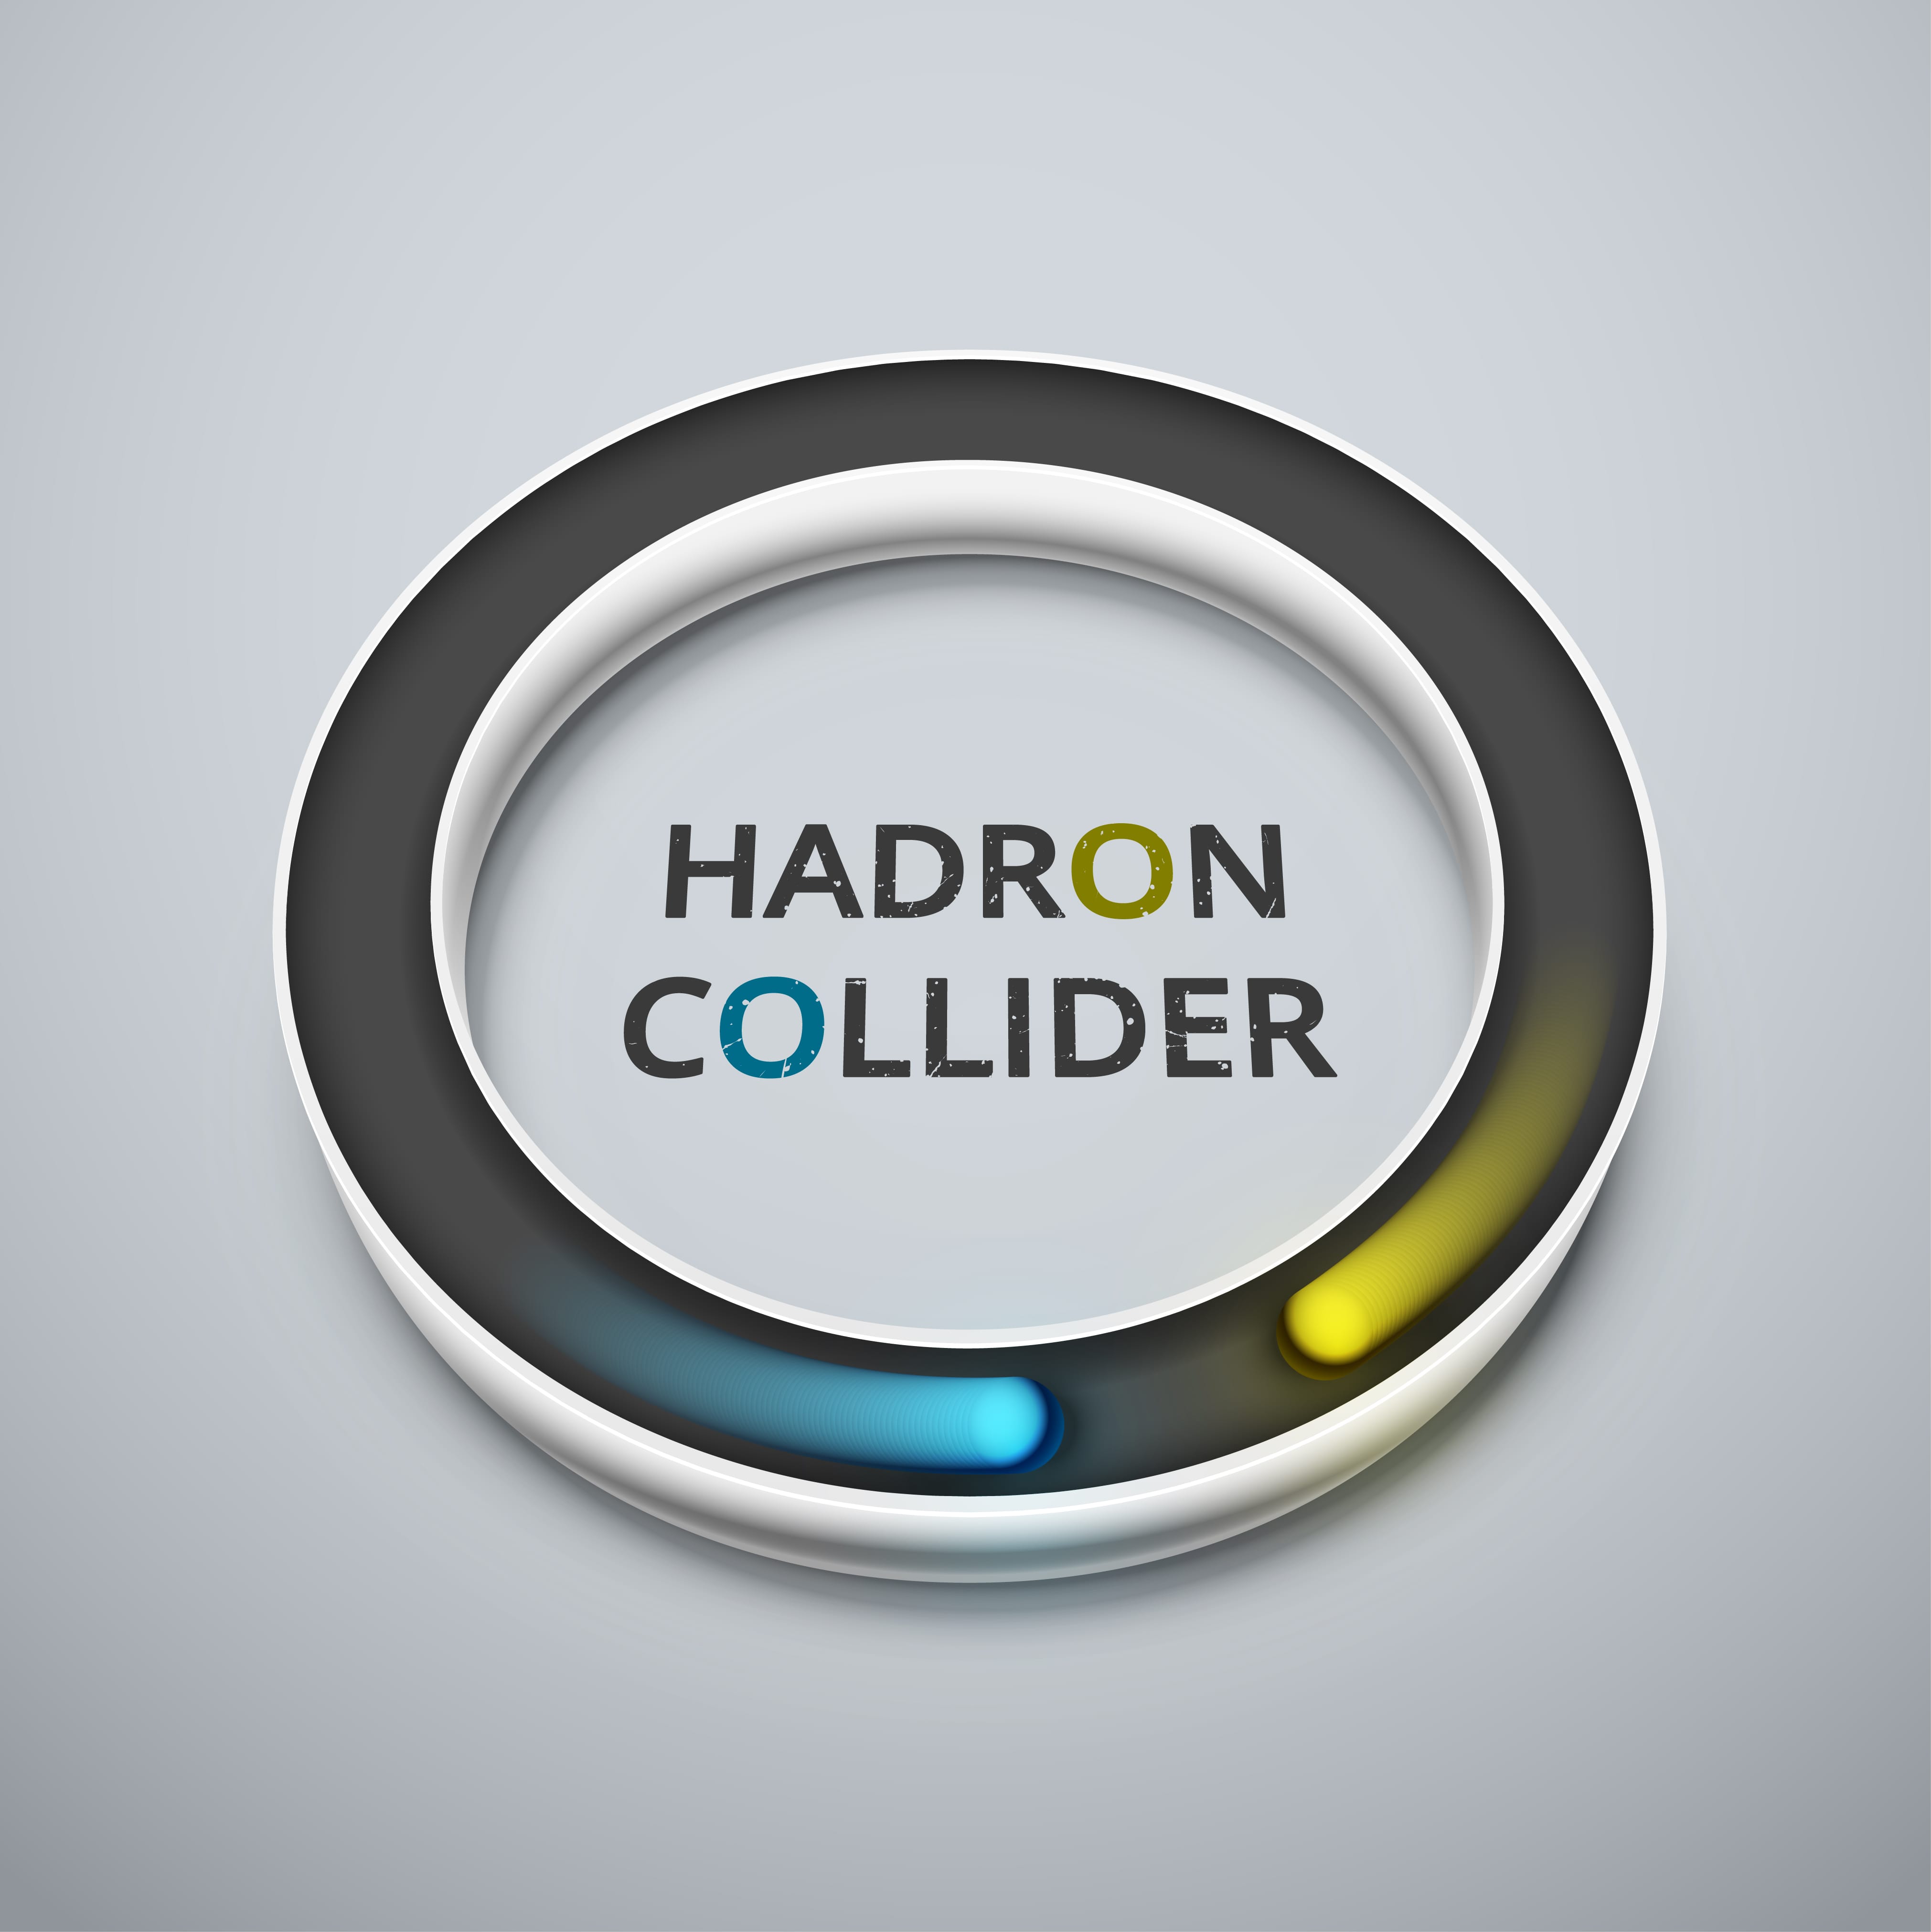 HADRON COLLIDER